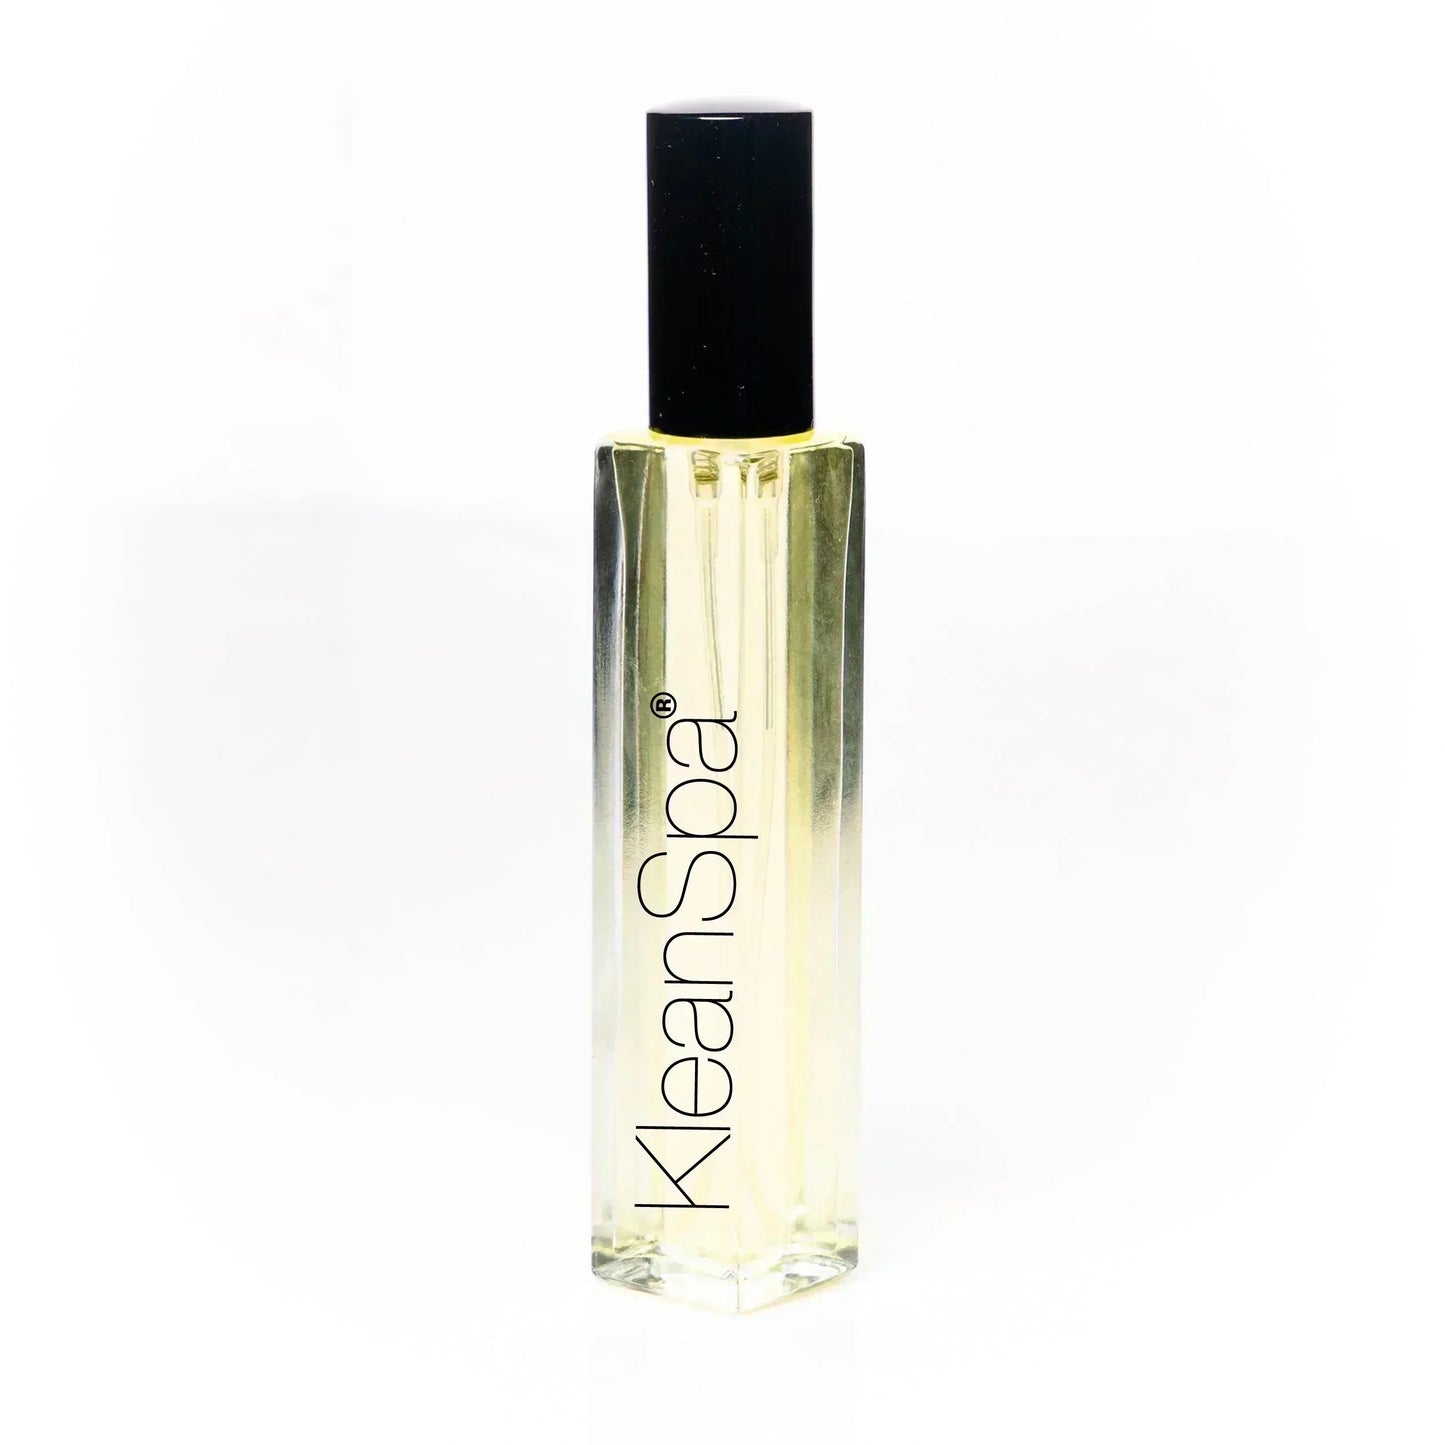 Extrait de Parfum (35% fragrance): Very Vanilla